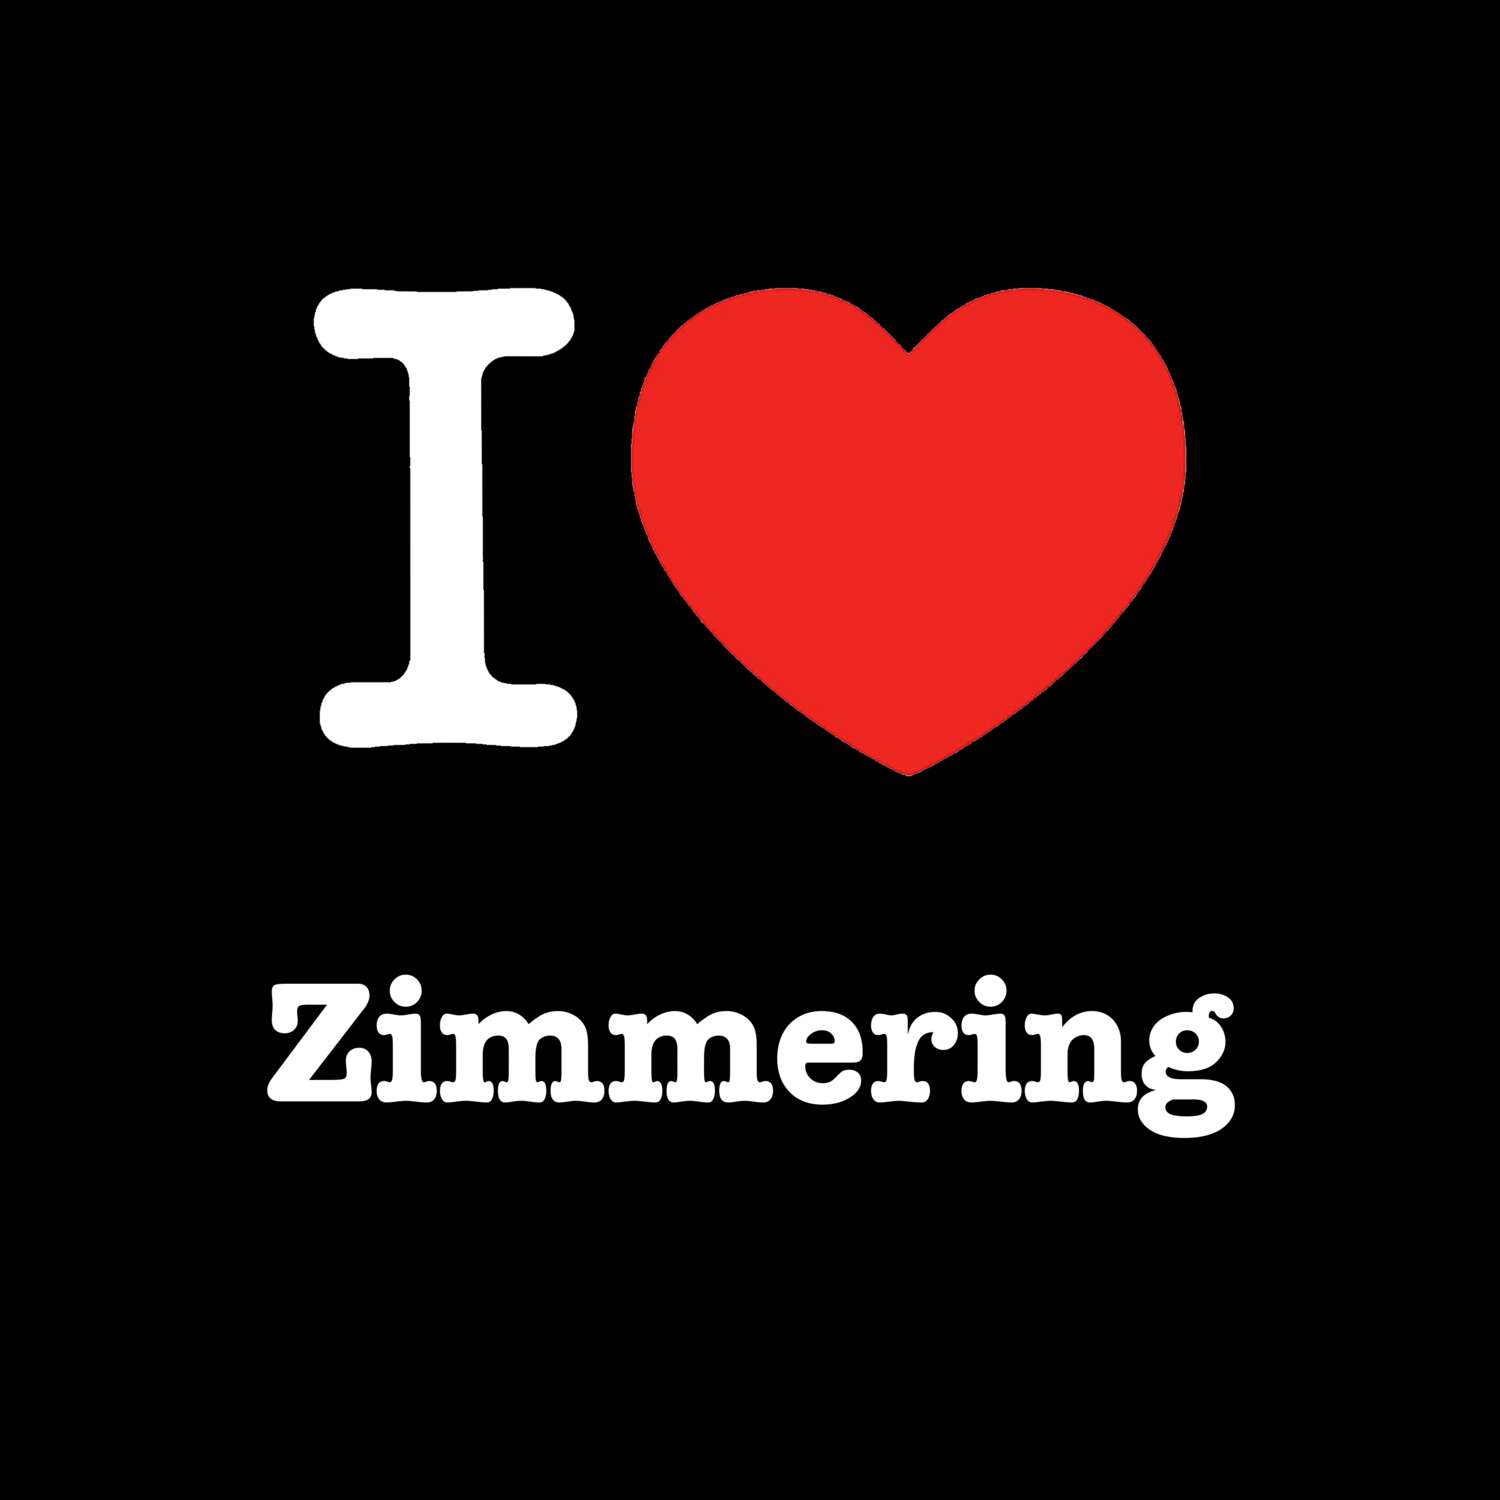 Zimmering T-Shirt »I love«